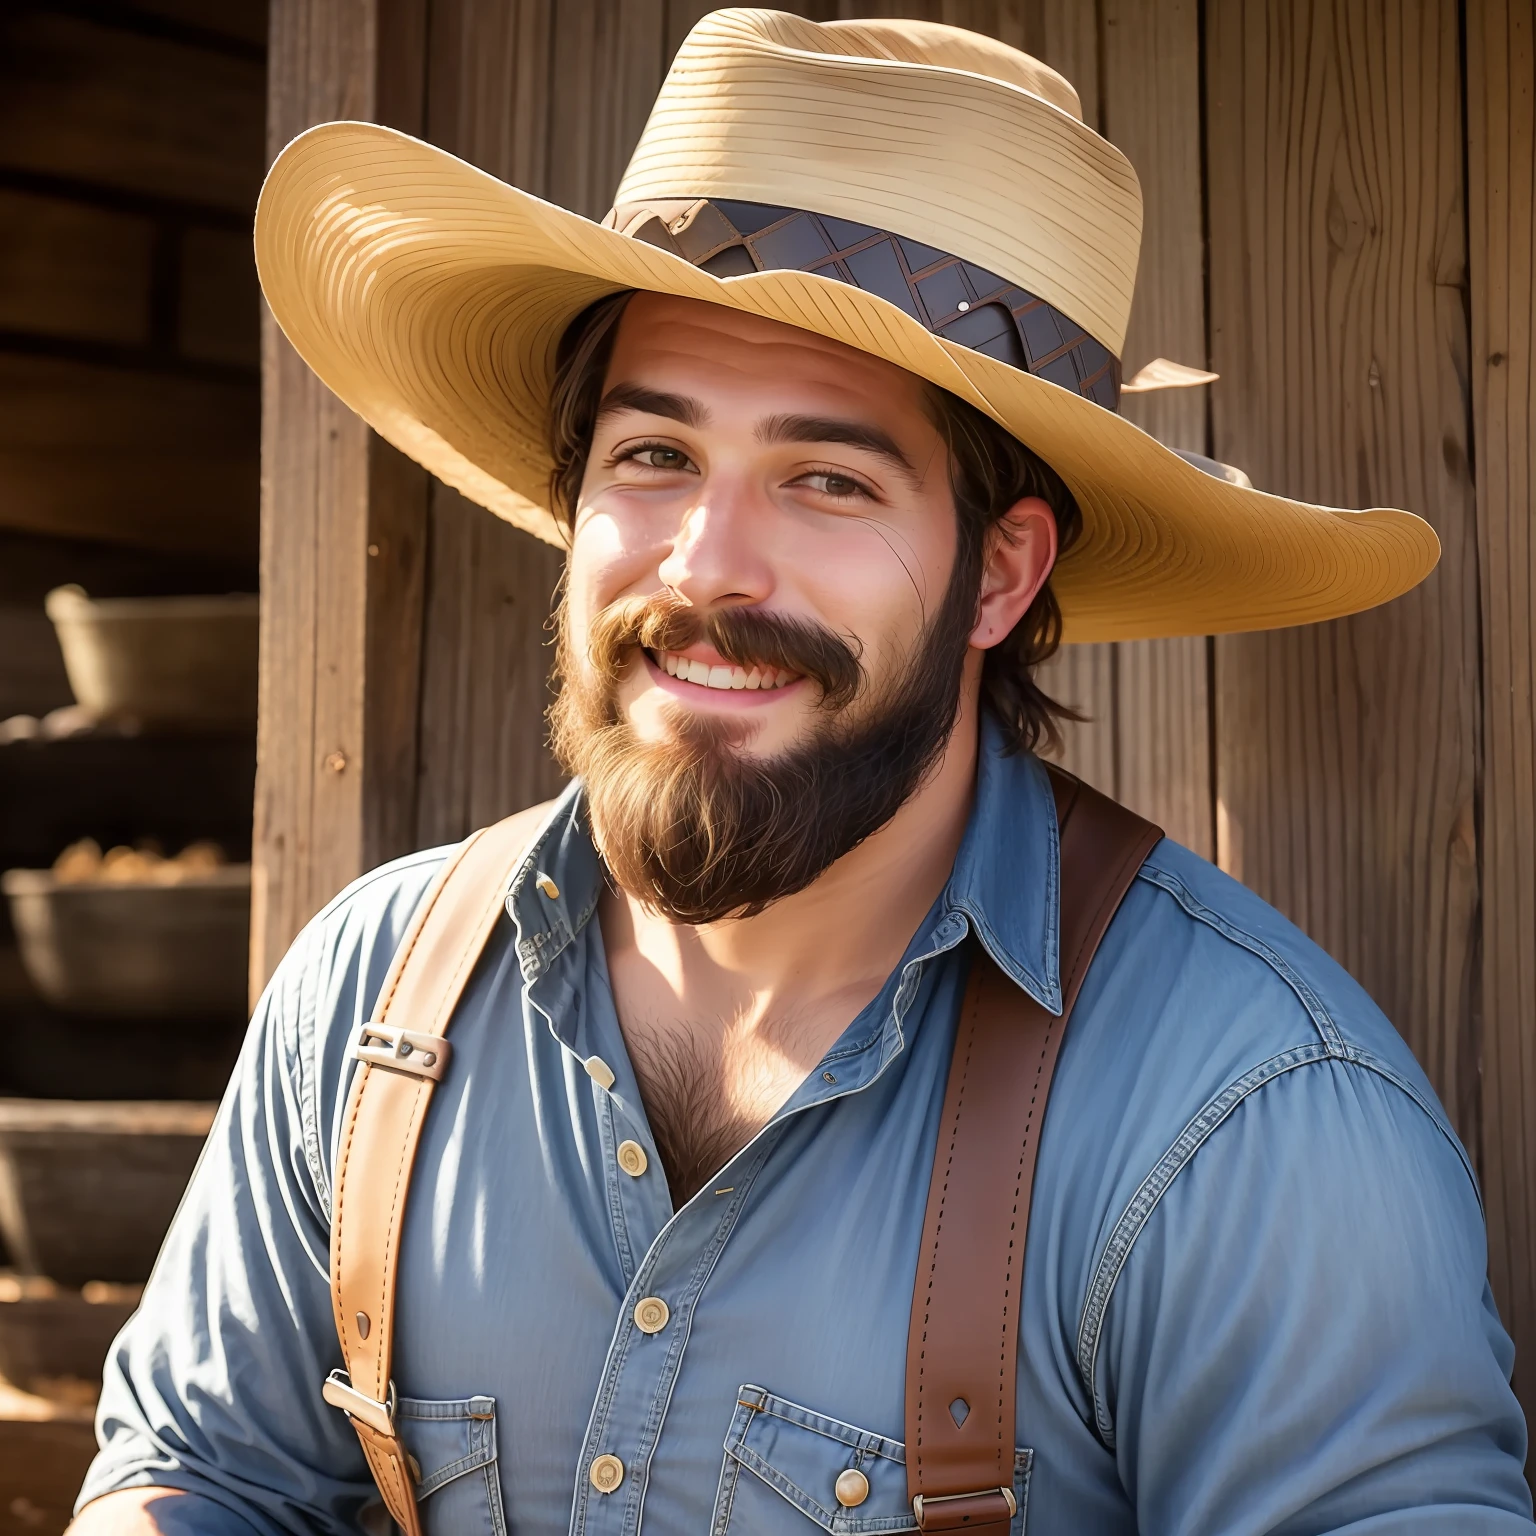 A 真实感 portrait of a young man in a rancher clothes', 一件棕褐色的衬衫, 背带裤和牛仔裤，戴着牧场主帽子, 超现实主义, 真实感, 蓬松自然的头发, 自然面容, 胡子, 鬓角, , 超详细. 快乐的